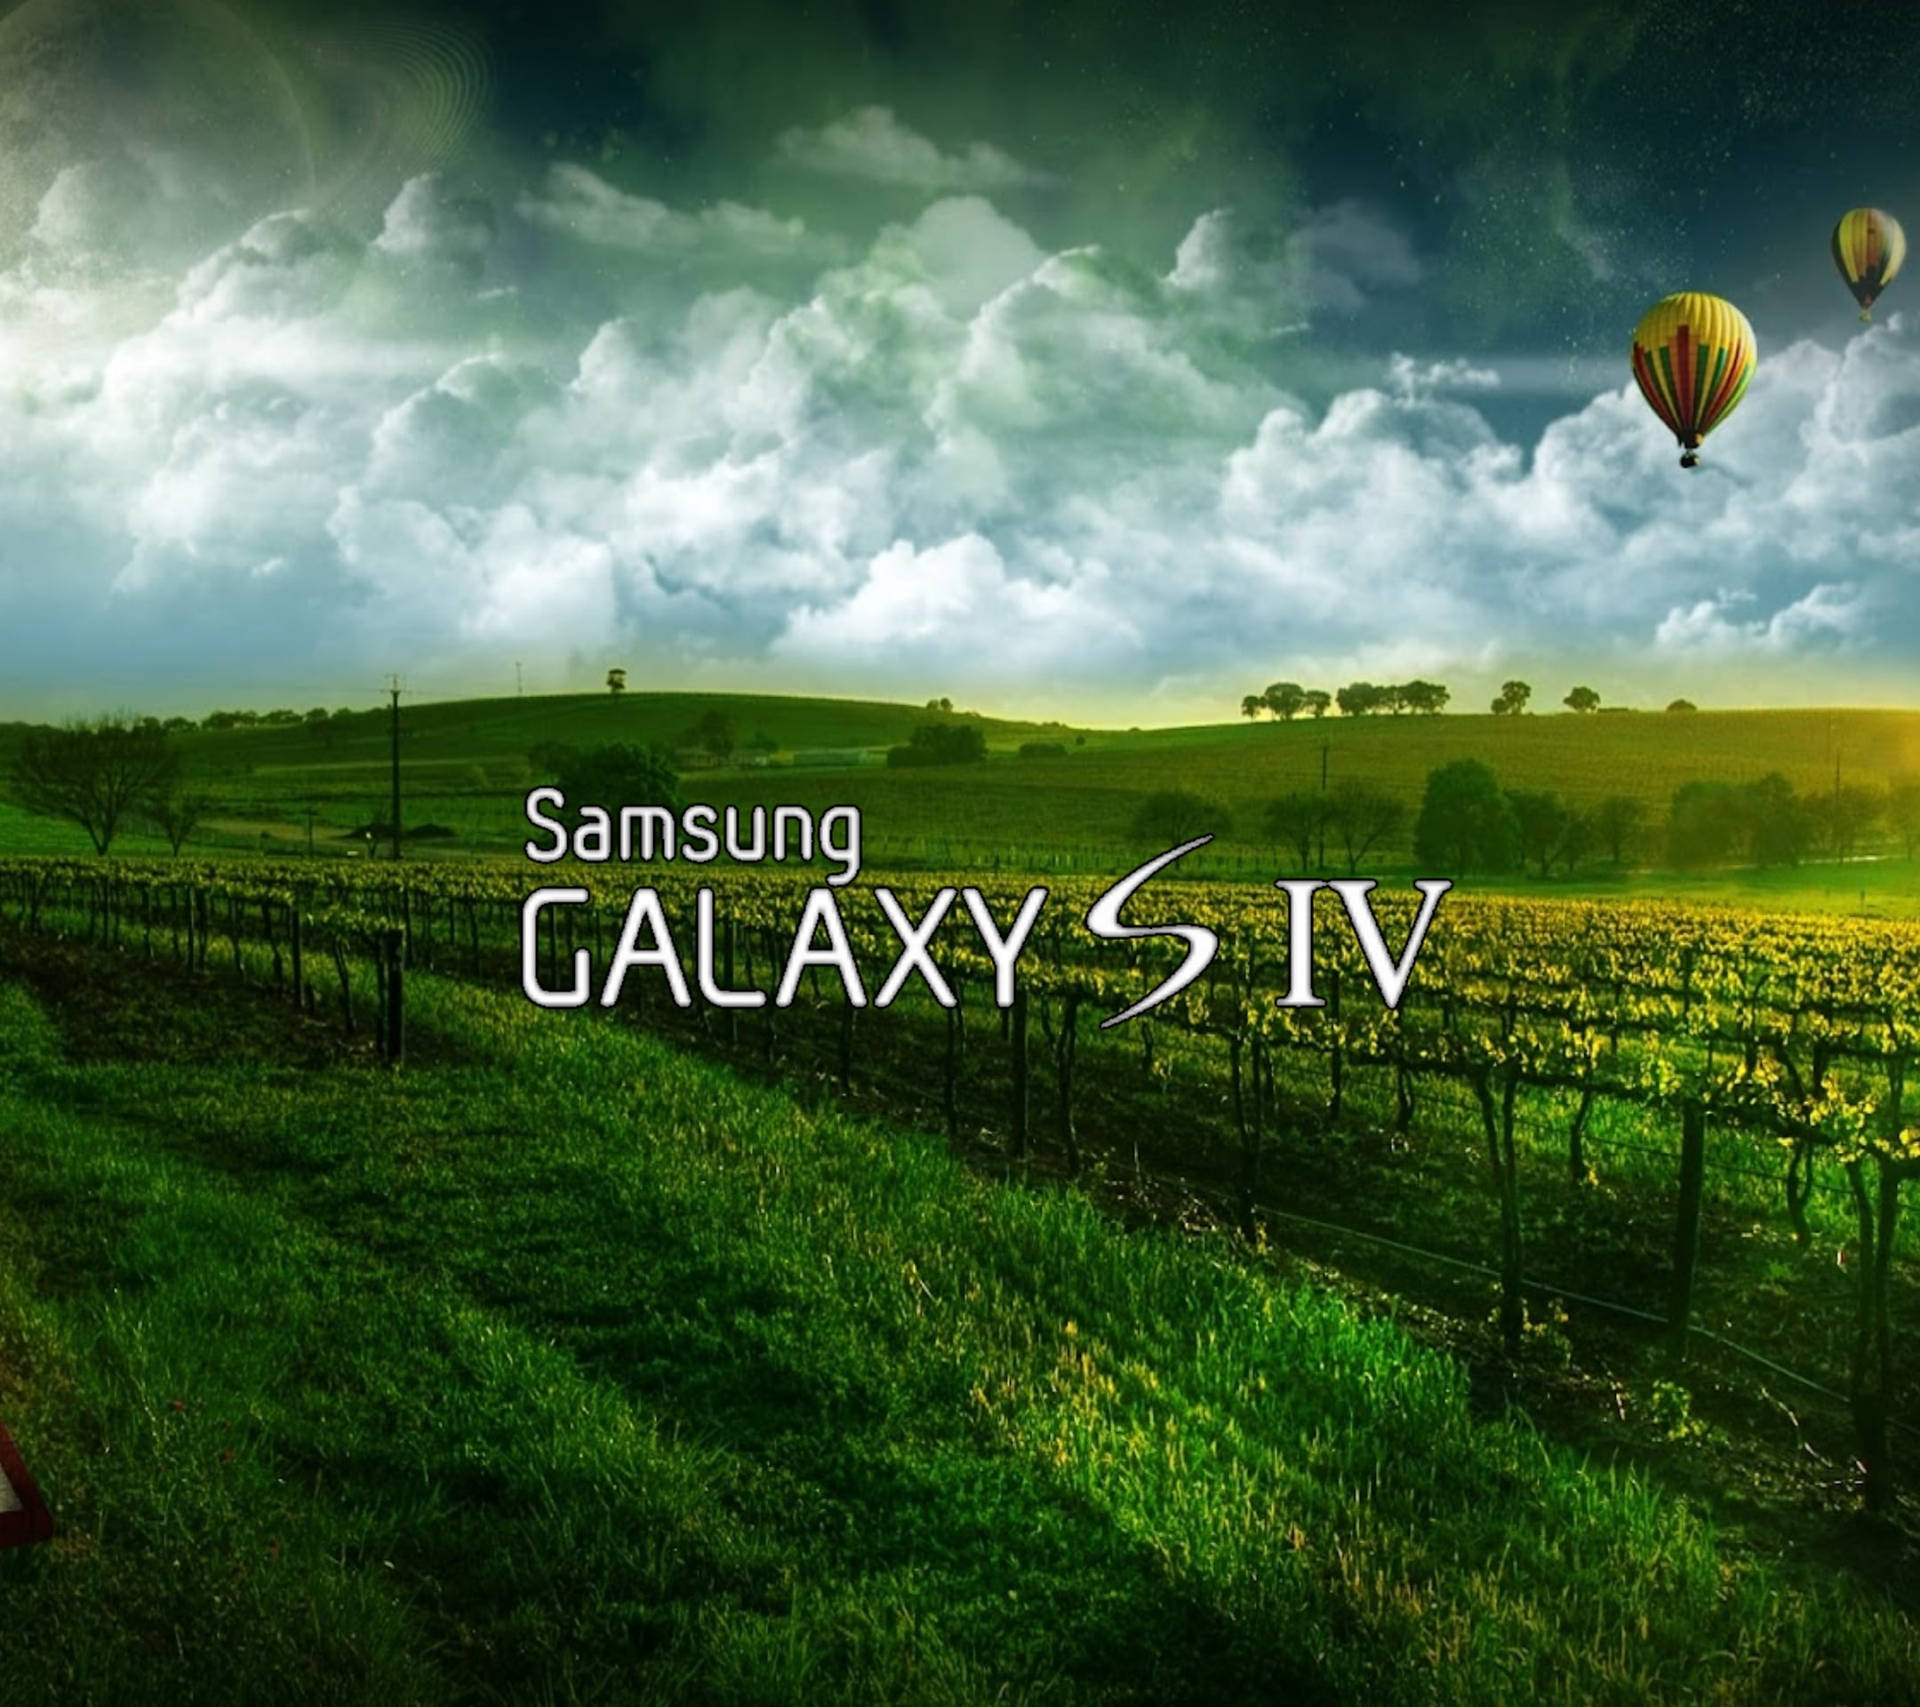 Free Samsung Galaxy S4 Wallpaper Downloads, [100+] Samsung Galaxy S4  Wallpapers for FREE 